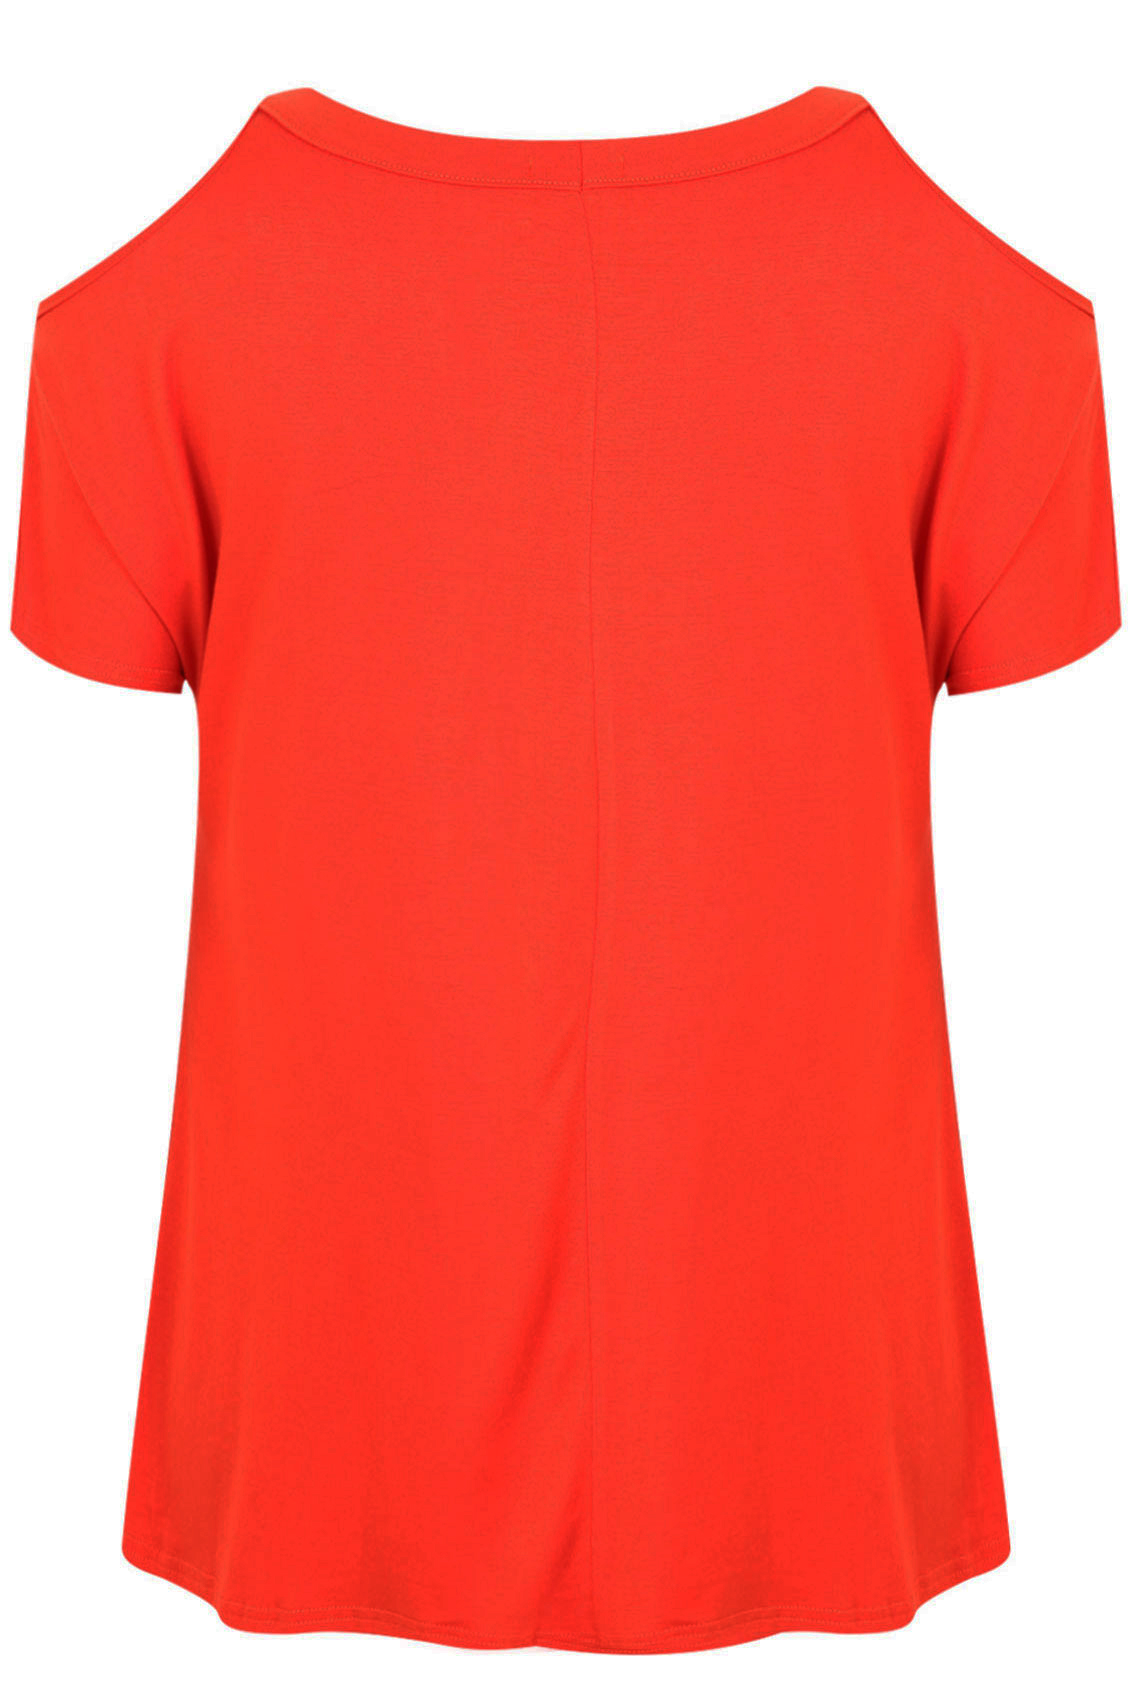 Orange Paisley Print Top With Cold Shoulders Plus size 16,18,20,22,24 ...